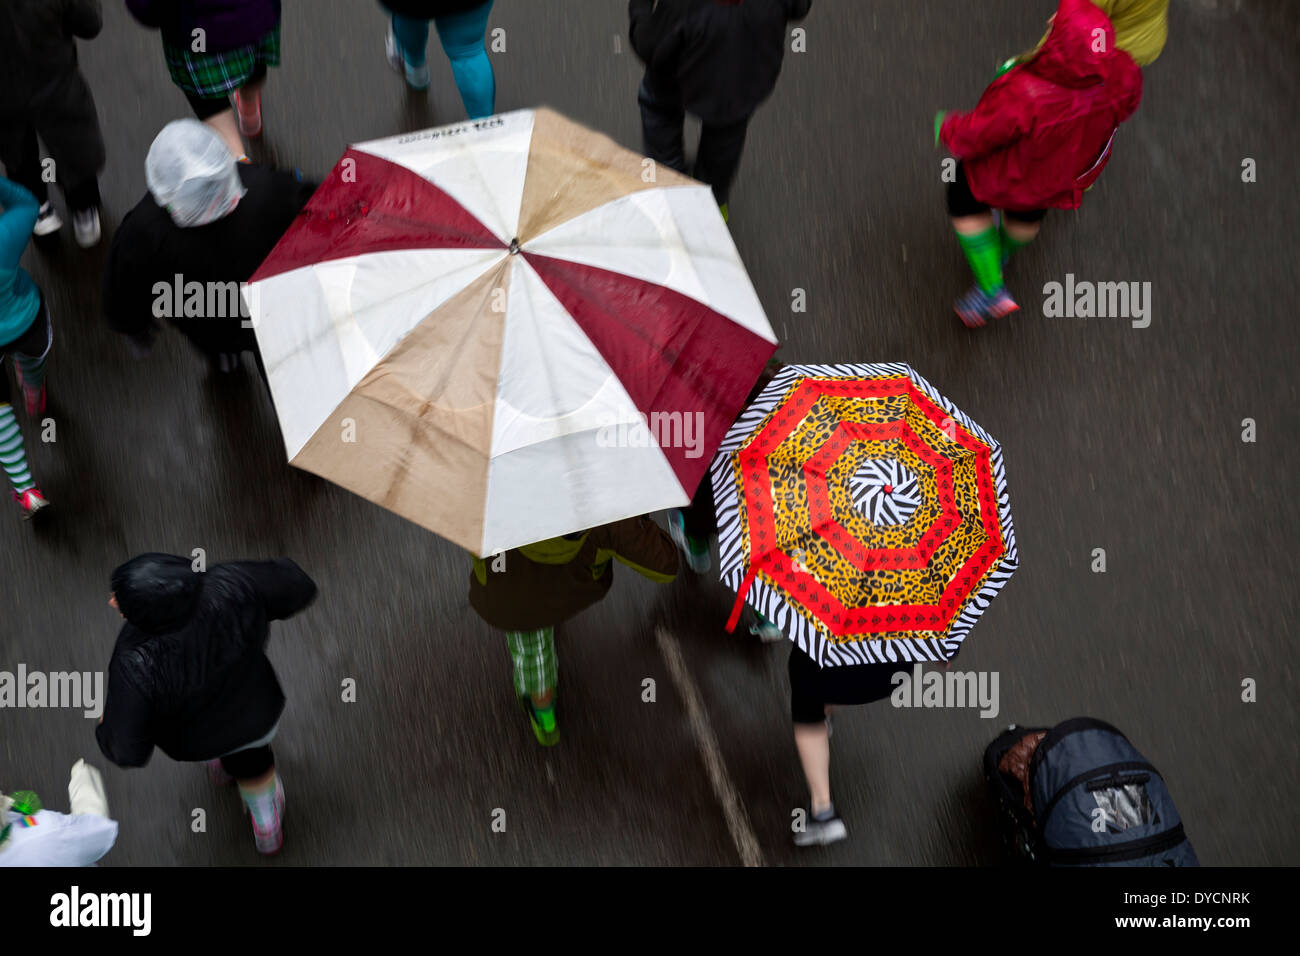 WA09538-00...WASHINGTON - People with umbrella on a rainy day in Seattle. Stock Photo